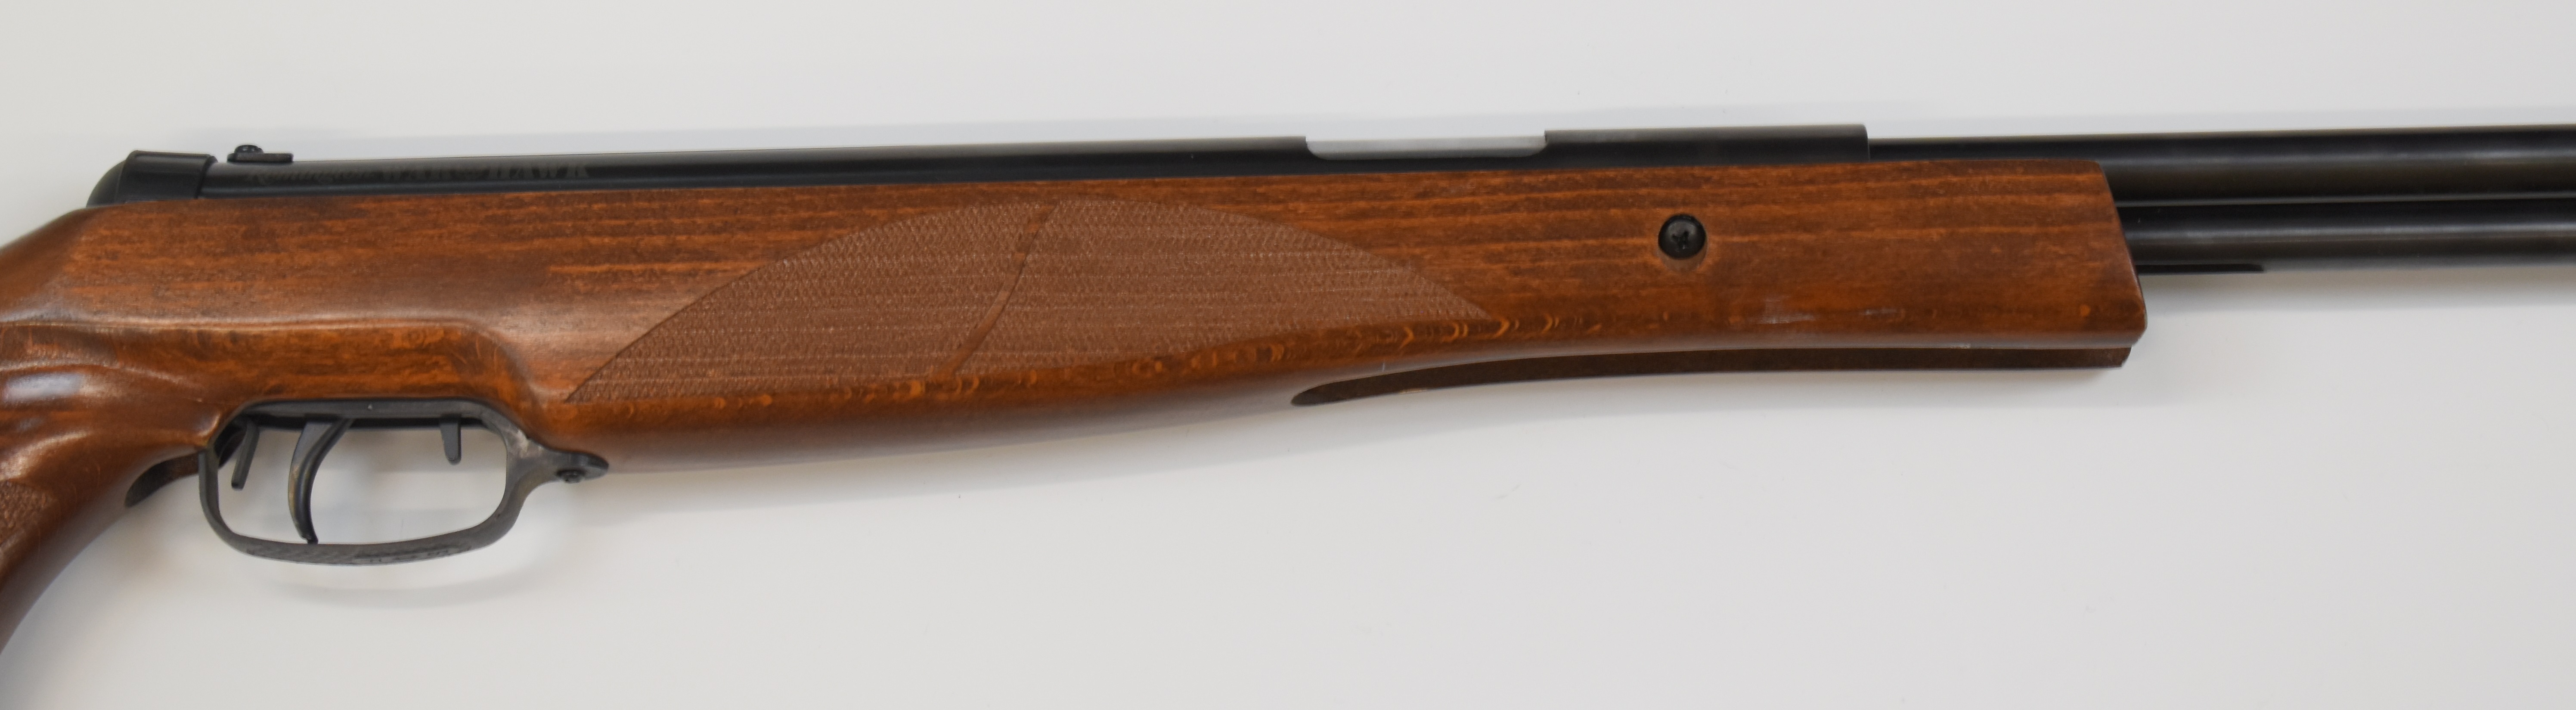 Remington Warhawk .177 under-lever air rifle with textured semi-pistol grip, raised cheek piece - Image 4 of 10